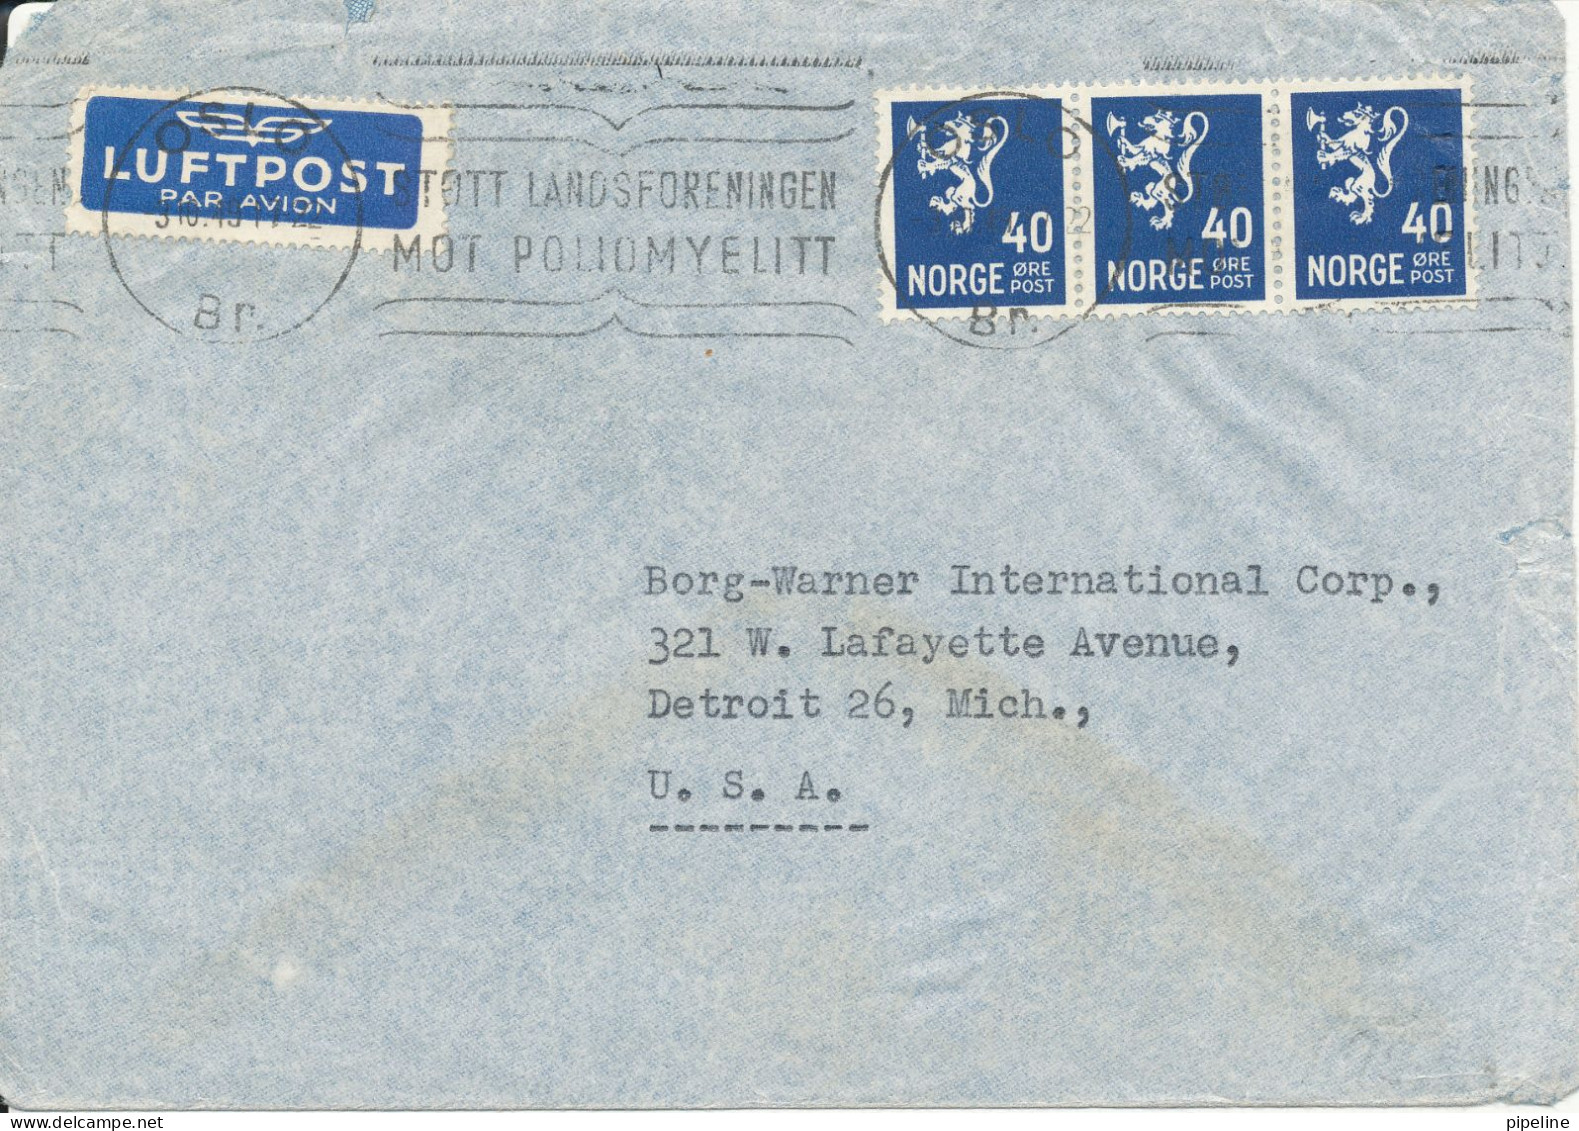 Norway Air Mail Cover Sent To USA 3-10-1949 (Stött Landsforeningen Mot Poliomyelitt) (A/S Norge Rollator Oslo) - Covers & Documents